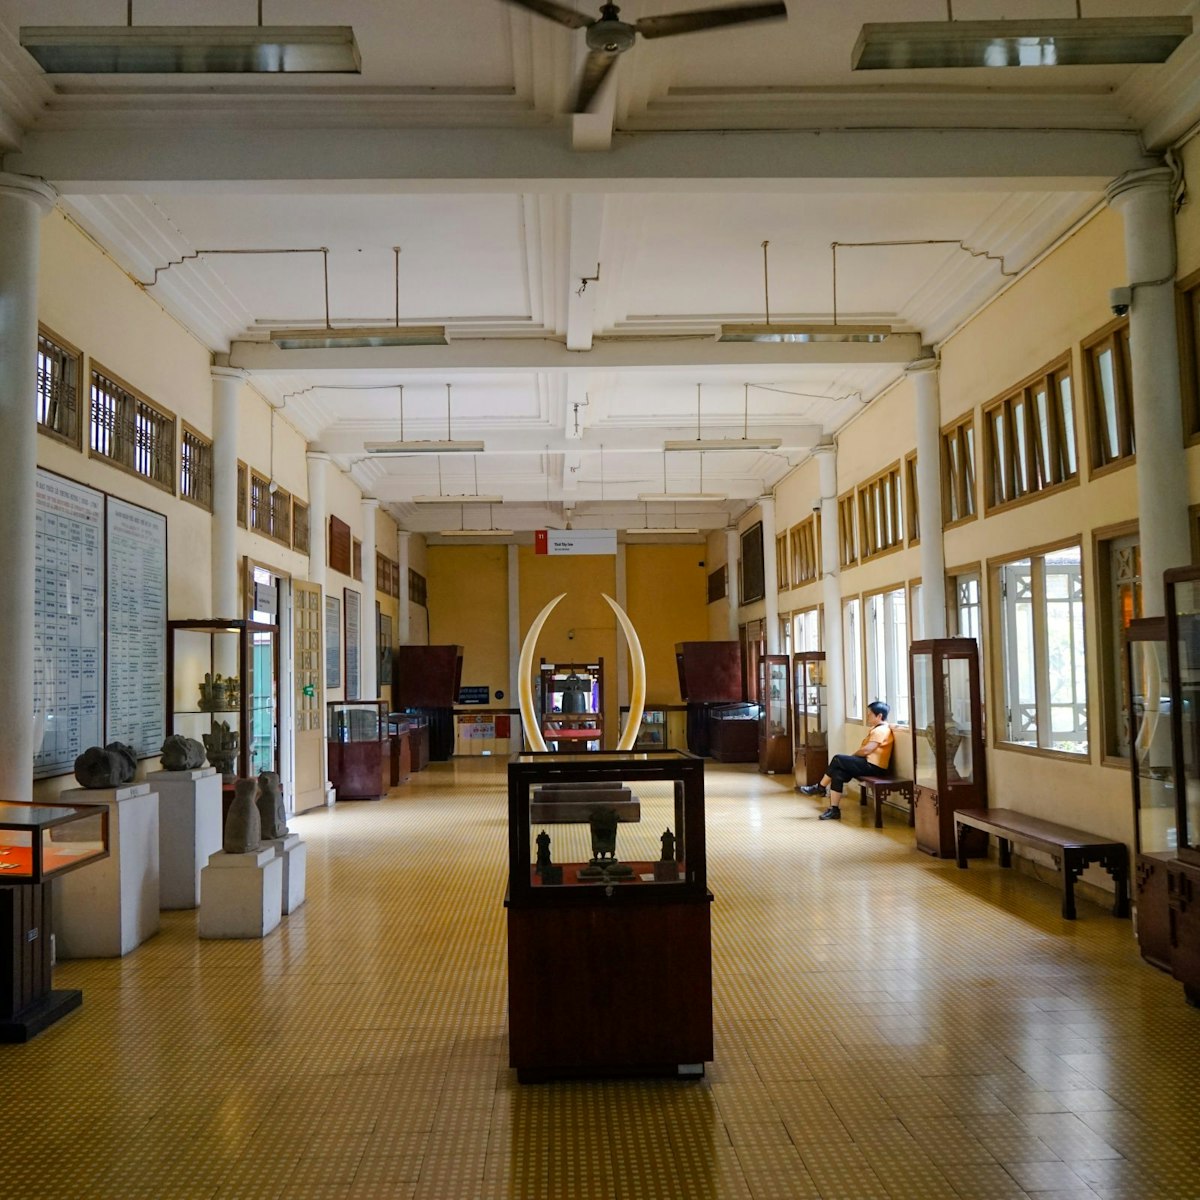 Exhibit on early Vietnamese history